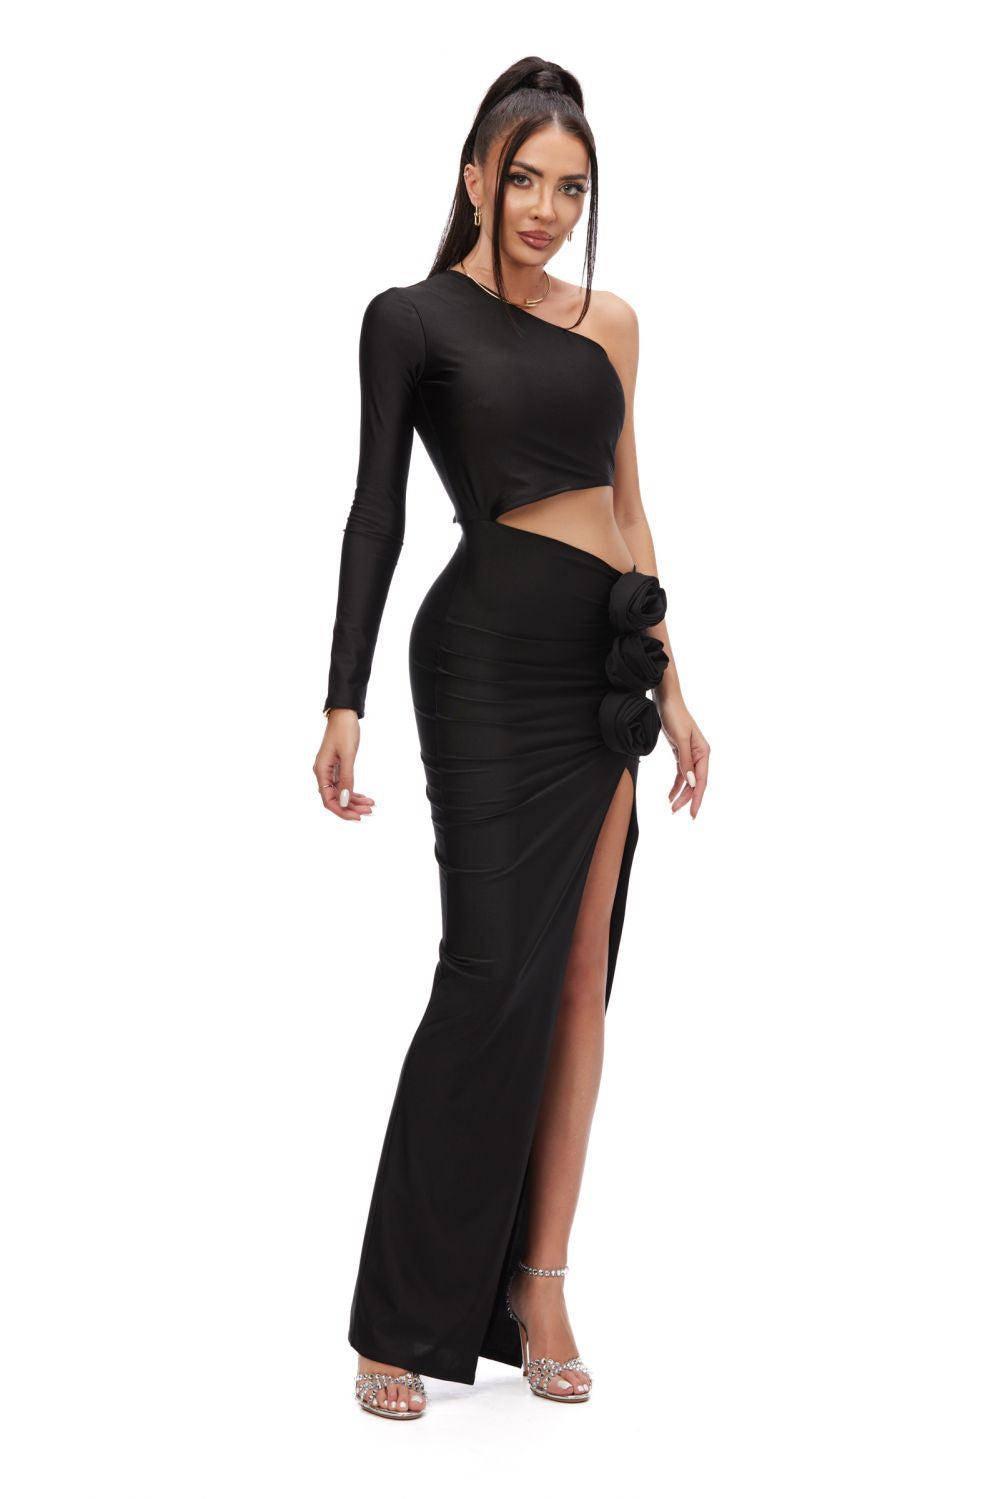 Ladies long black dress Bentamis Bogas